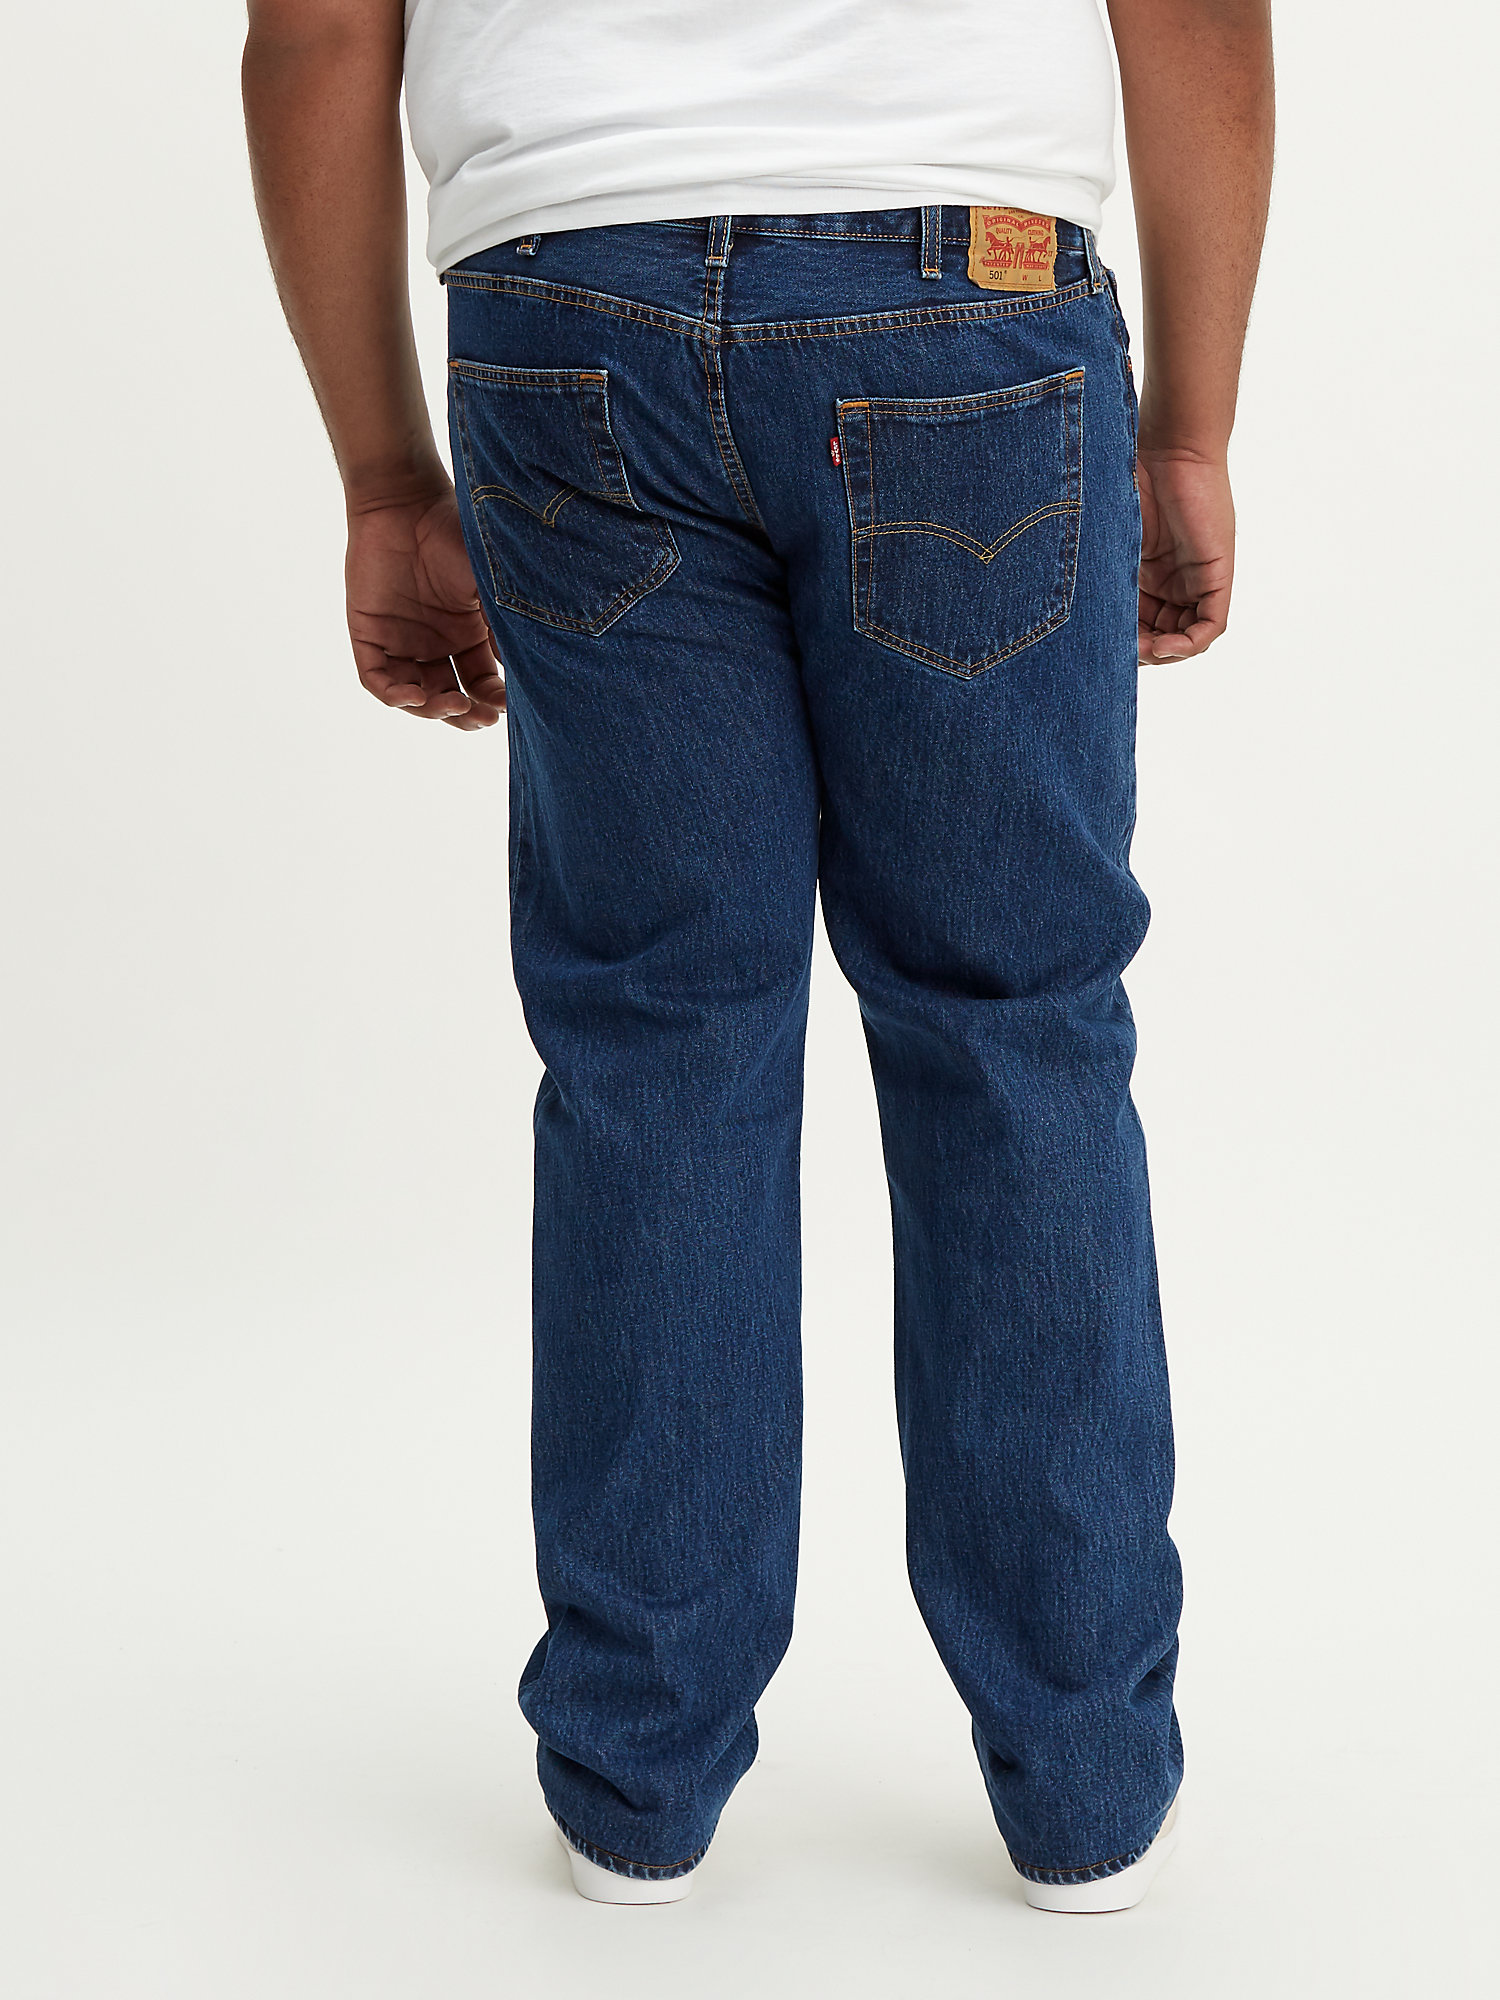 Levi's Men's Big & Tall 501 Original Fit Jeans - image 4 of 6